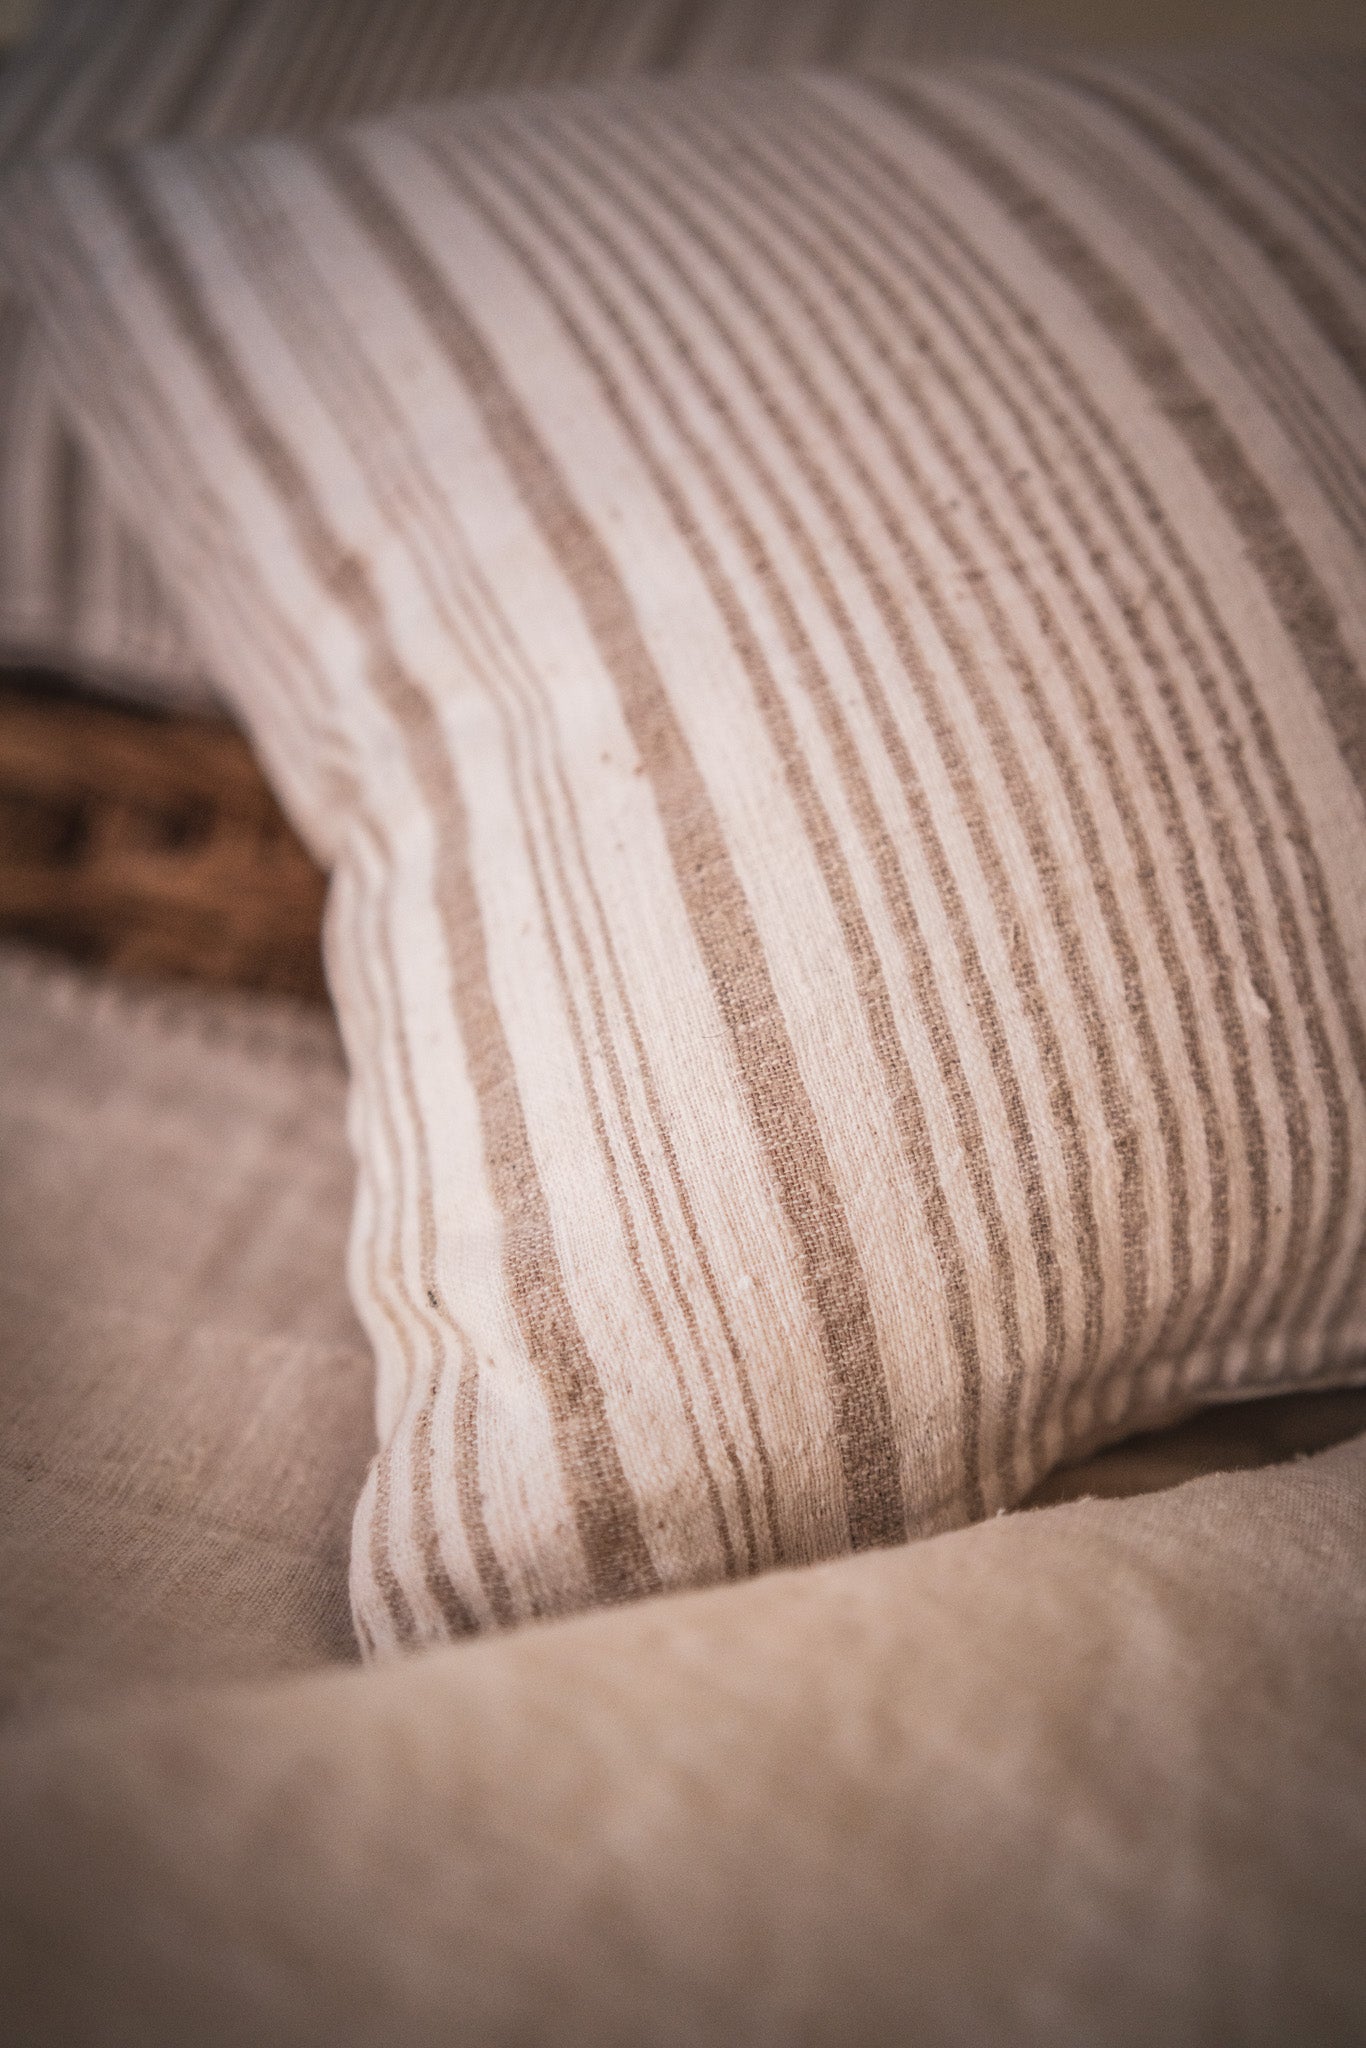 Pillow: Antique handwoven pillow, Bulgarian silk and cotton - P373